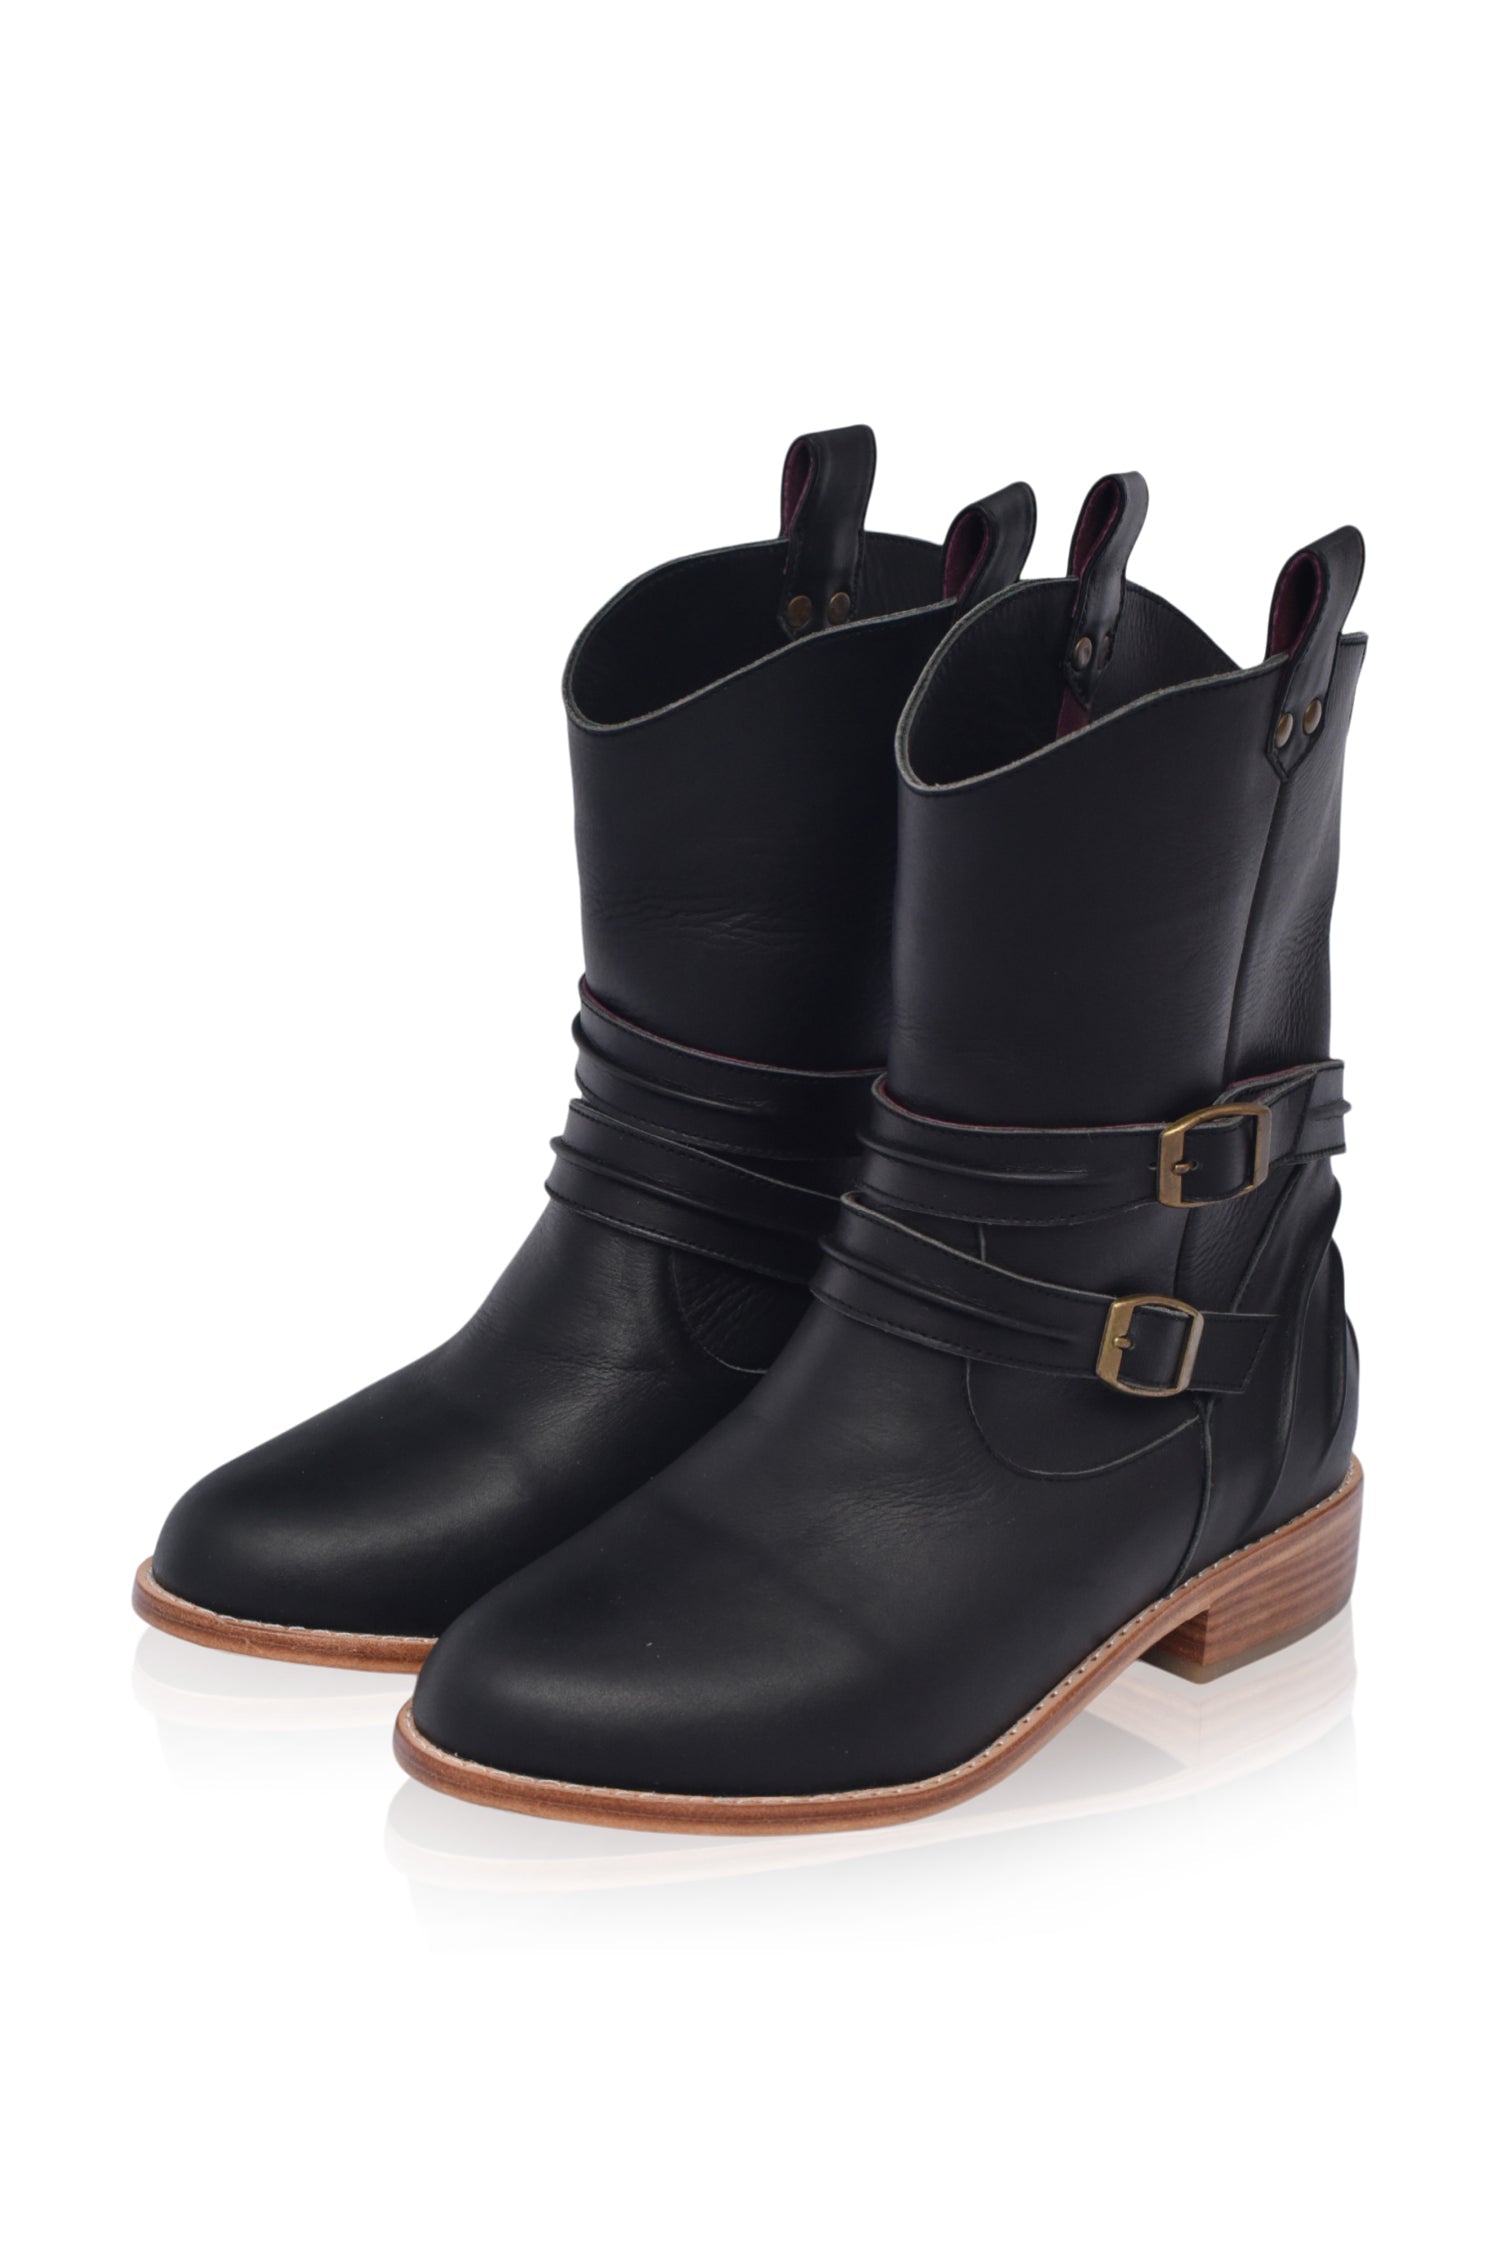 Barcelona Leather Boots (Sz. 9) ELF